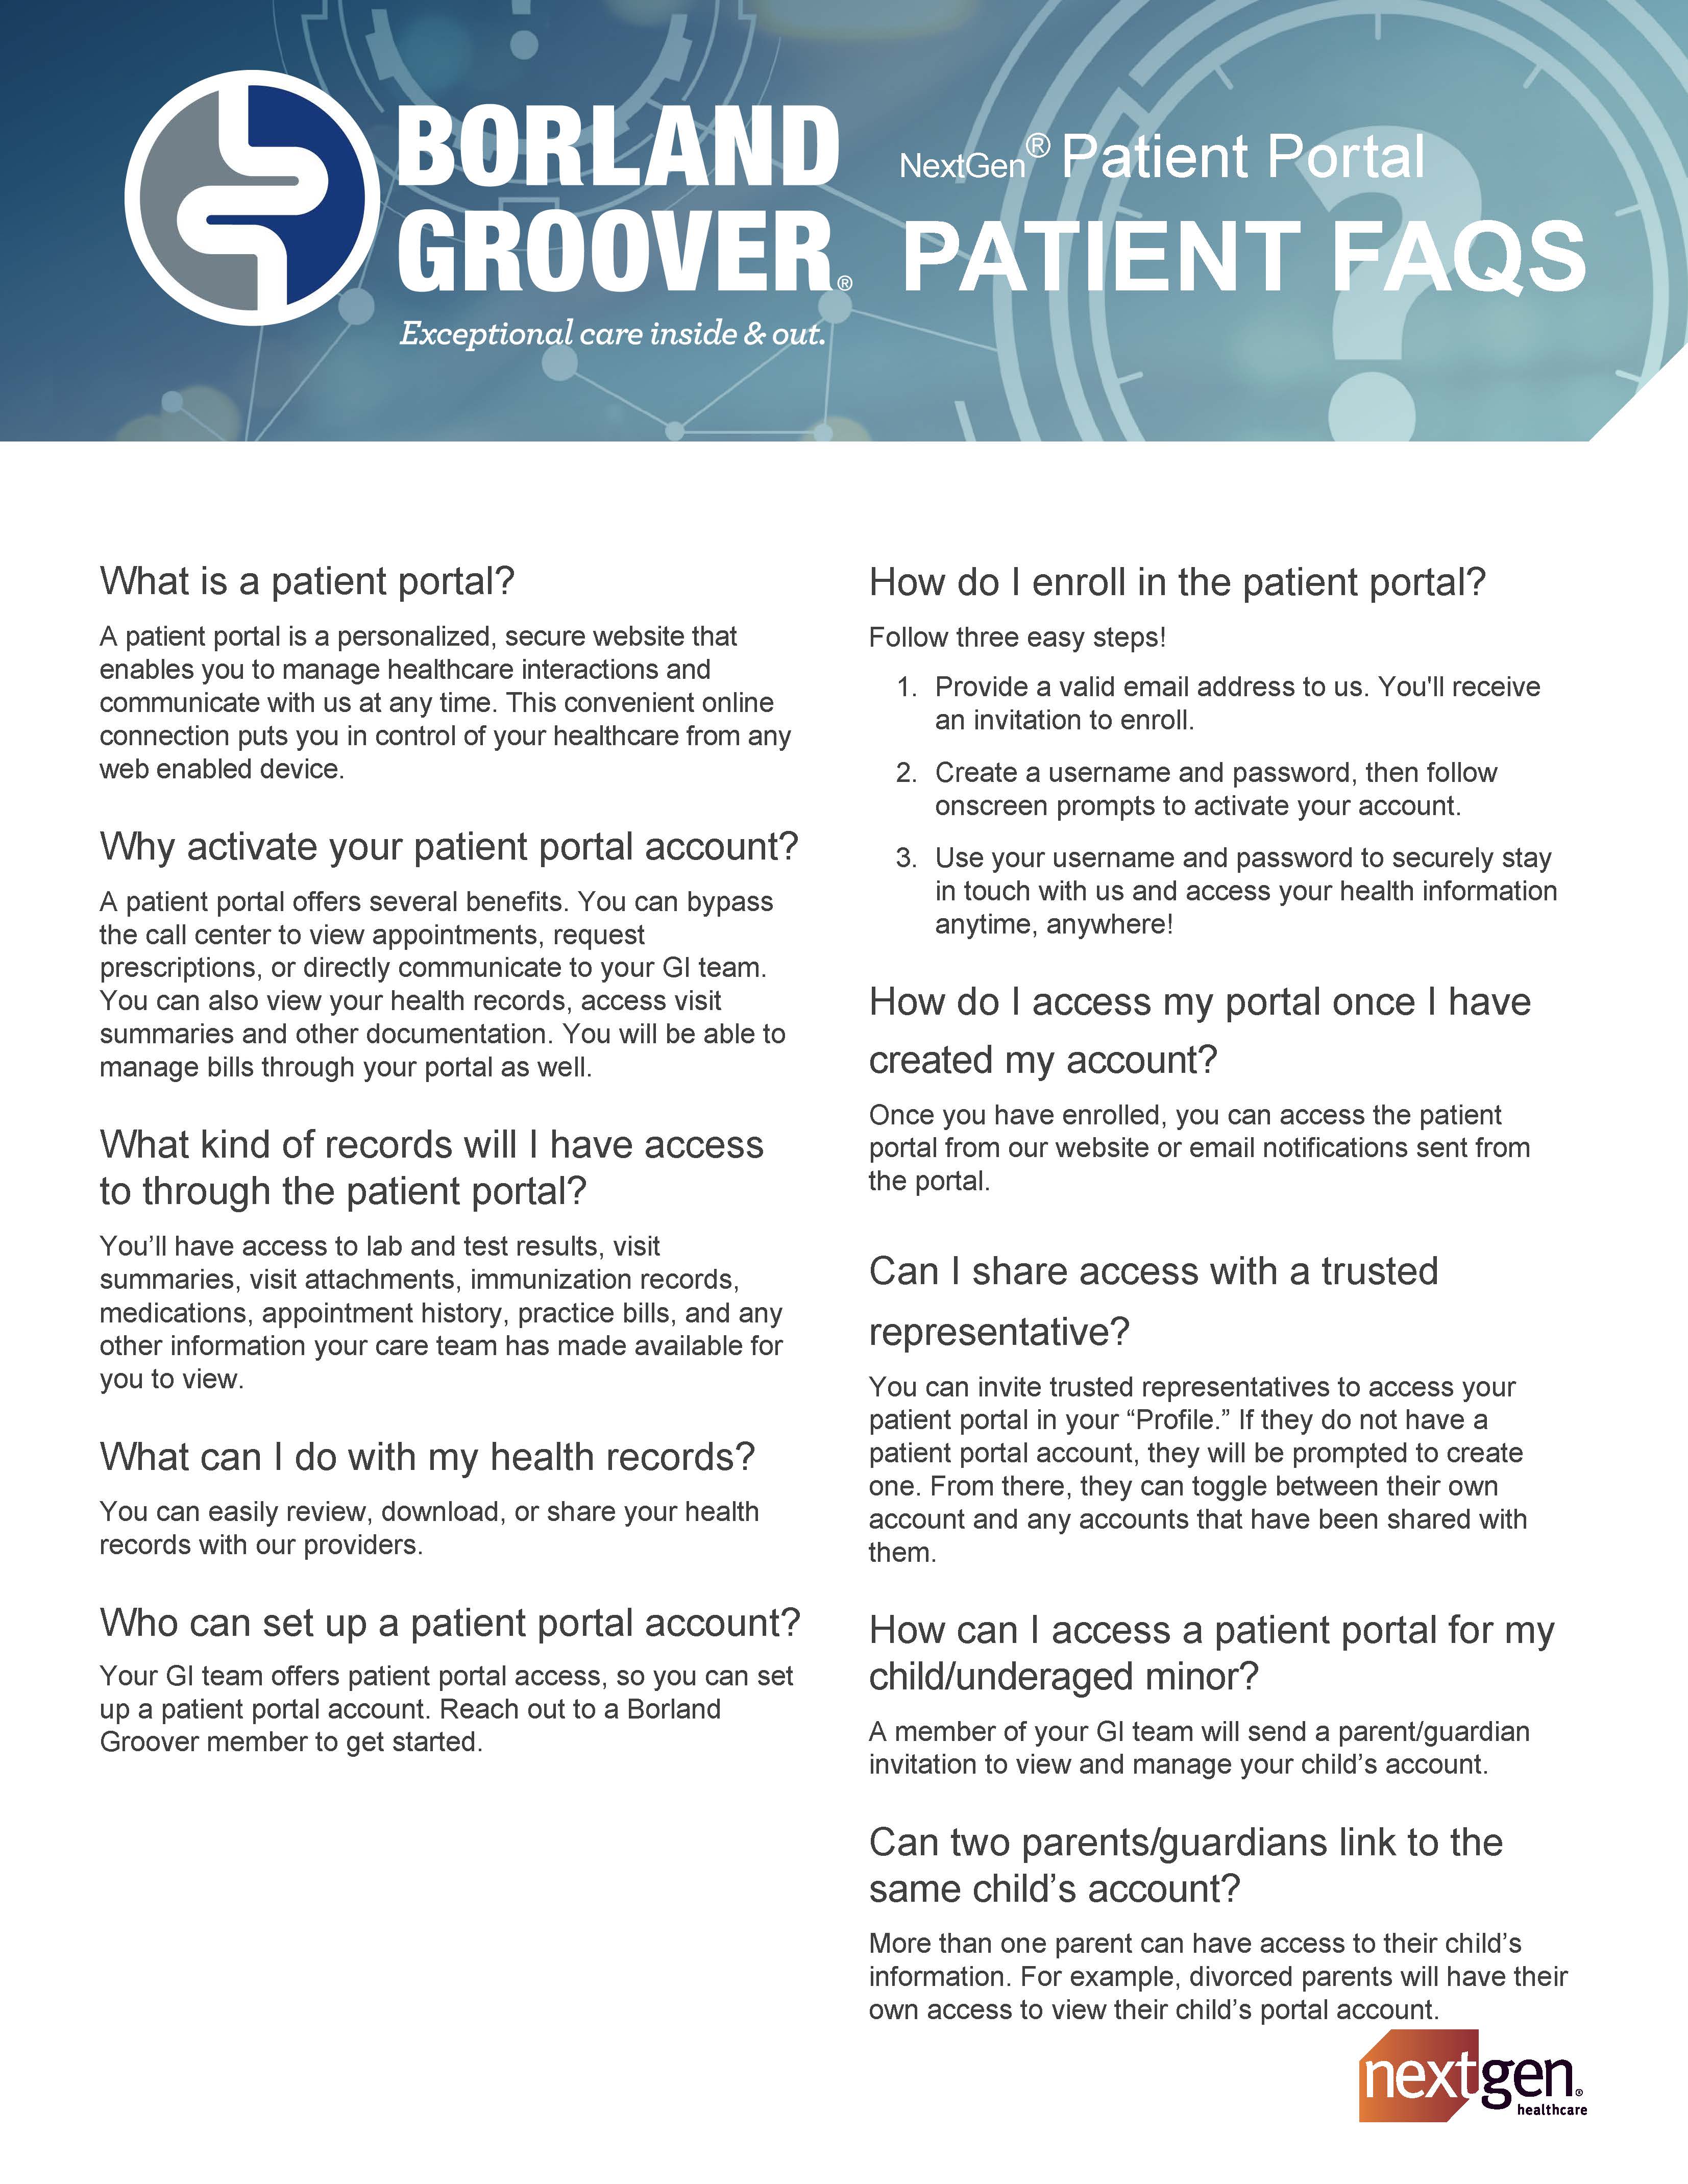 Borland Groover Patient Portal FAQ